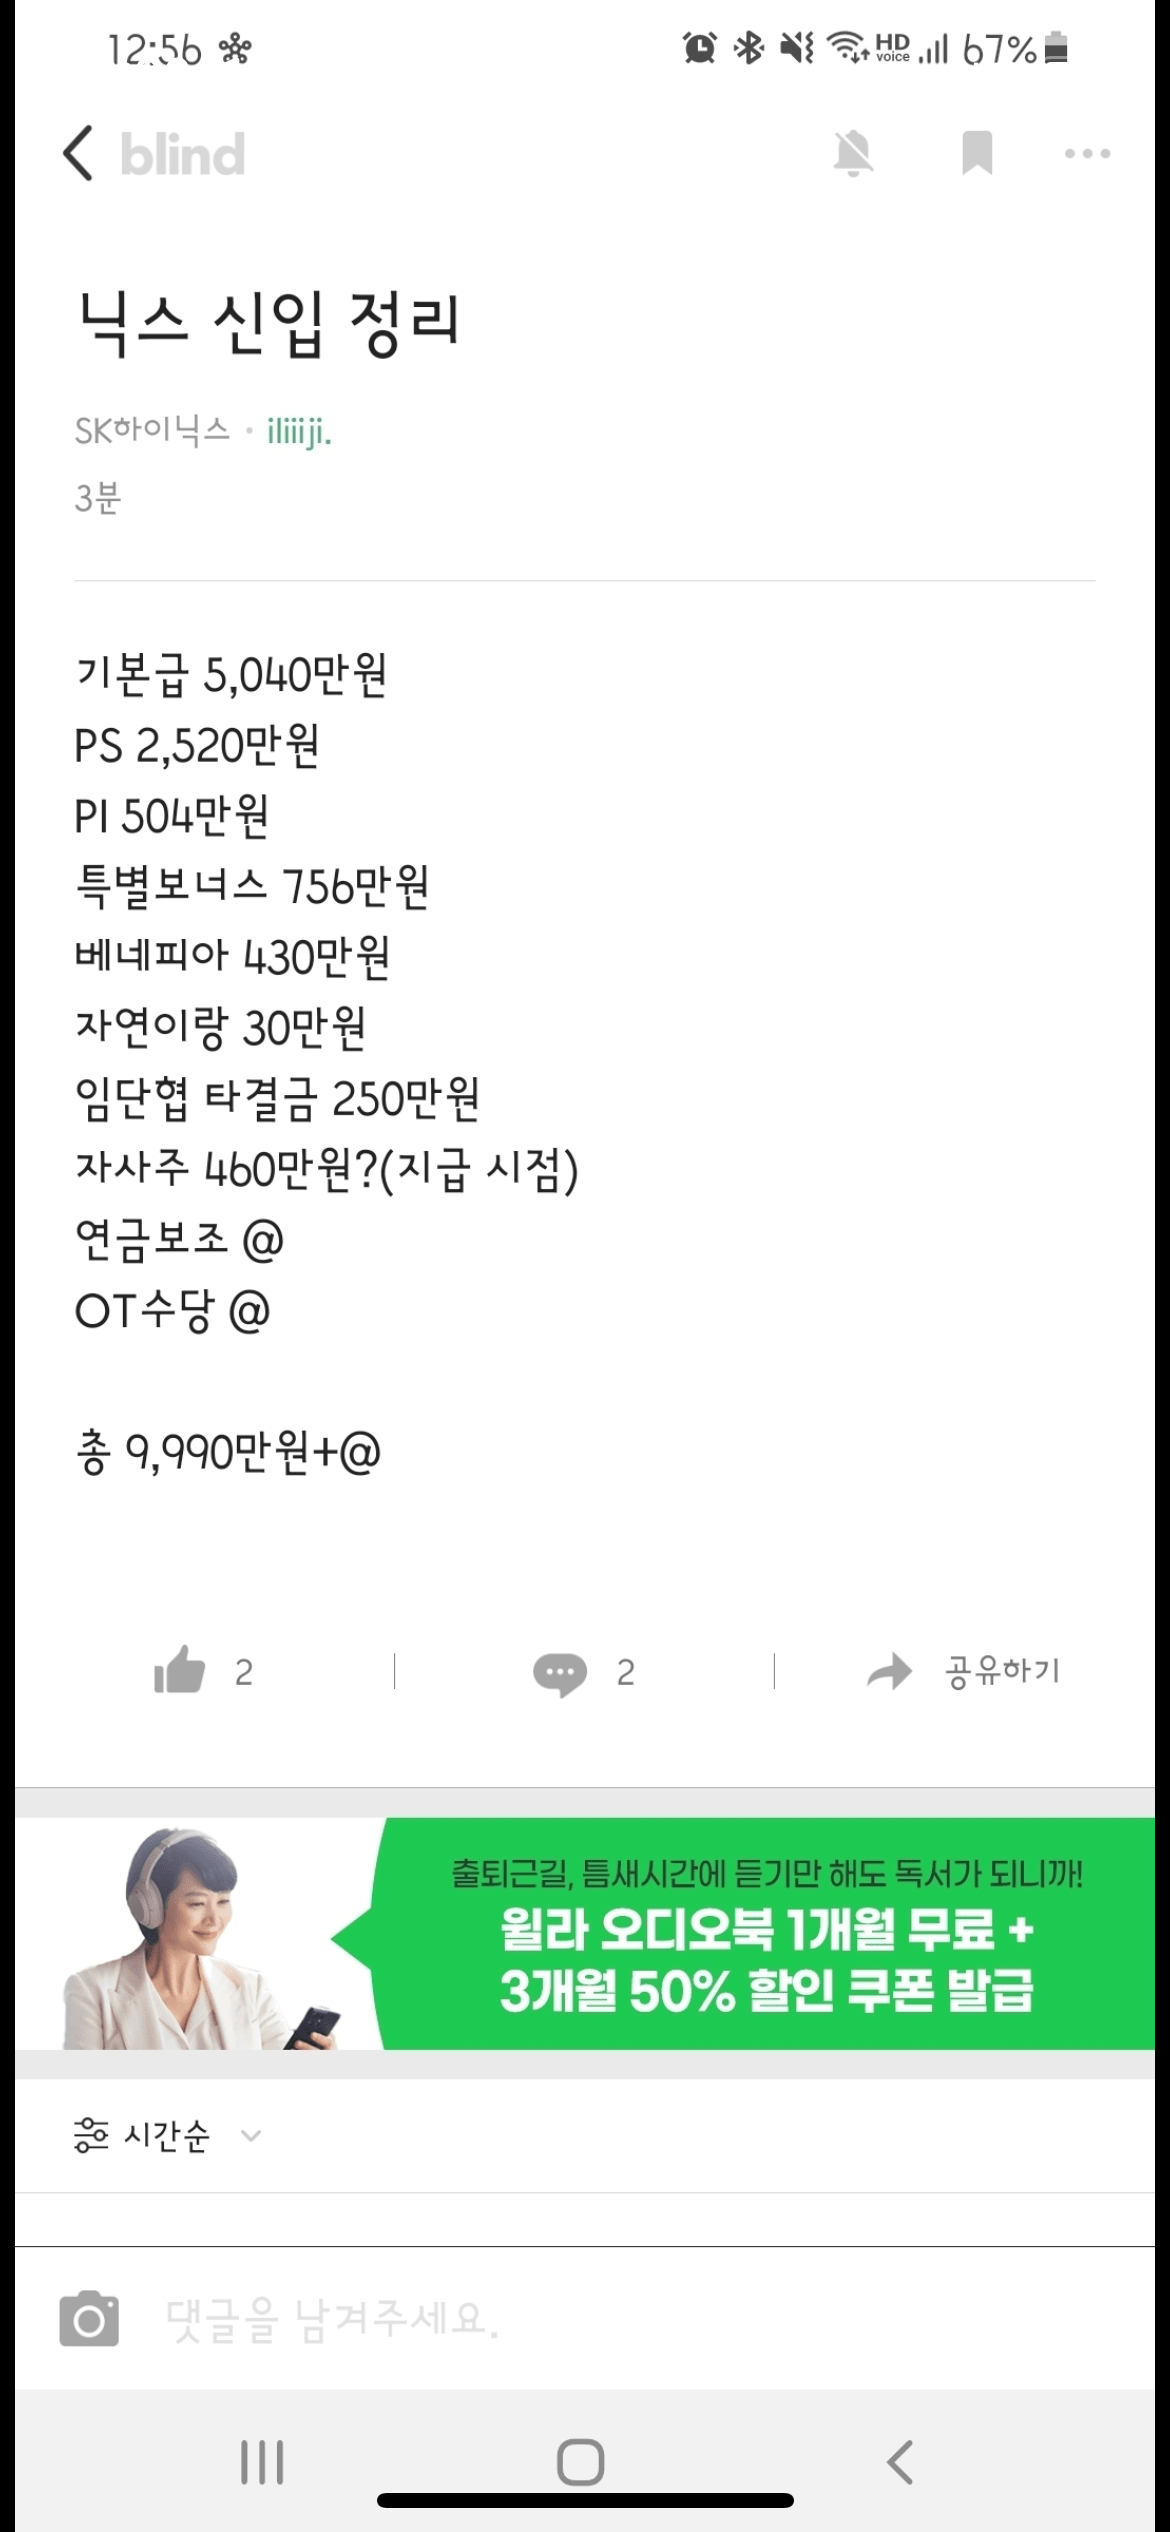 SK하이닉스 2022년 신입 연봉.jpg